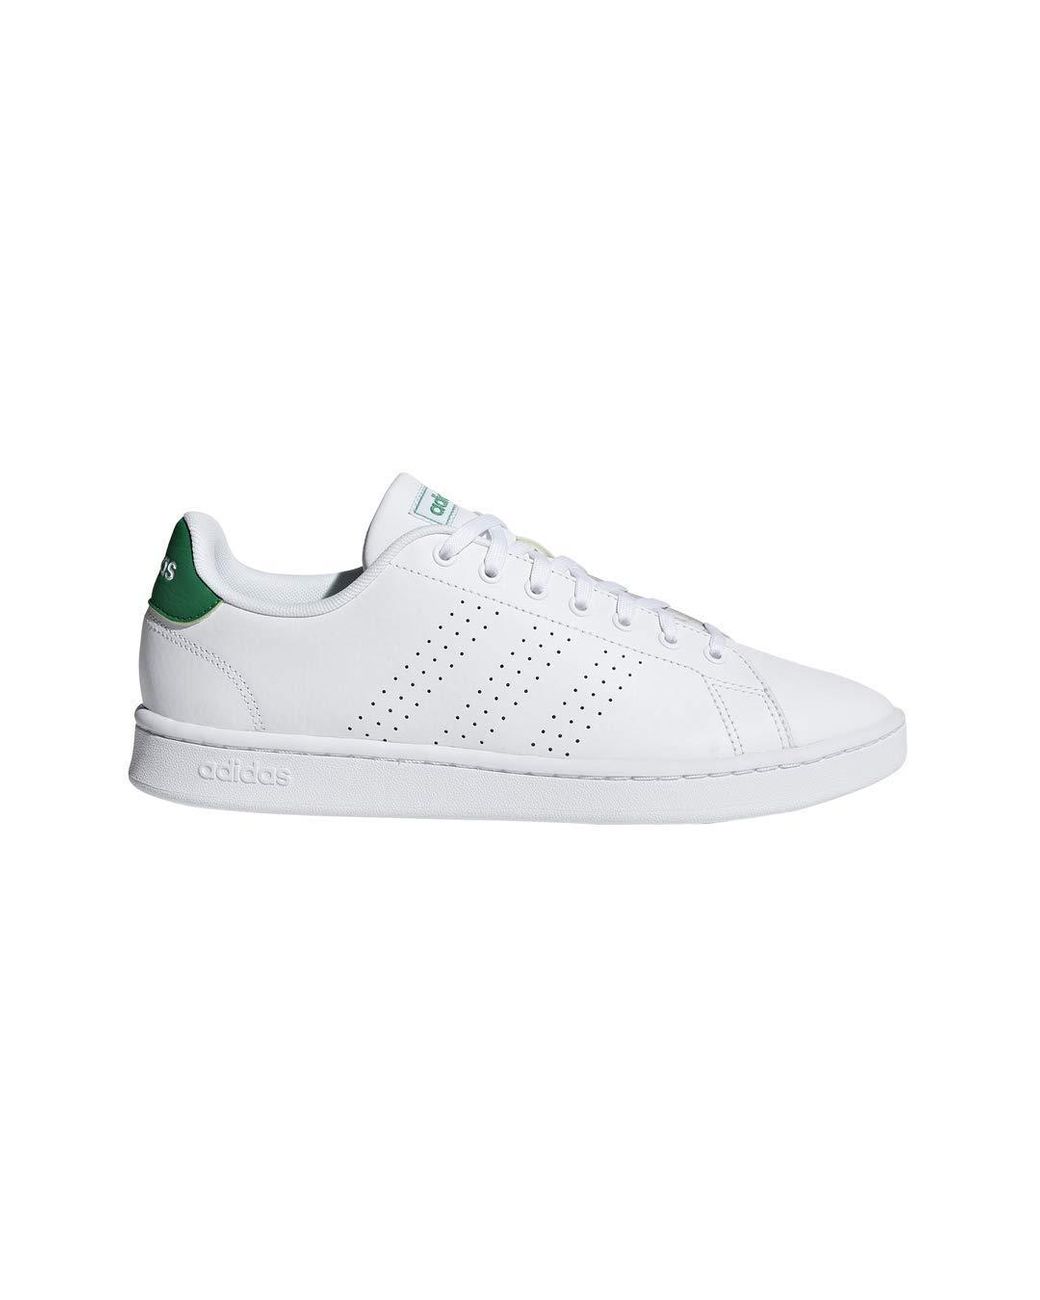 adidas Leather Advantage in White/White/Green (White) for Men - Lyst